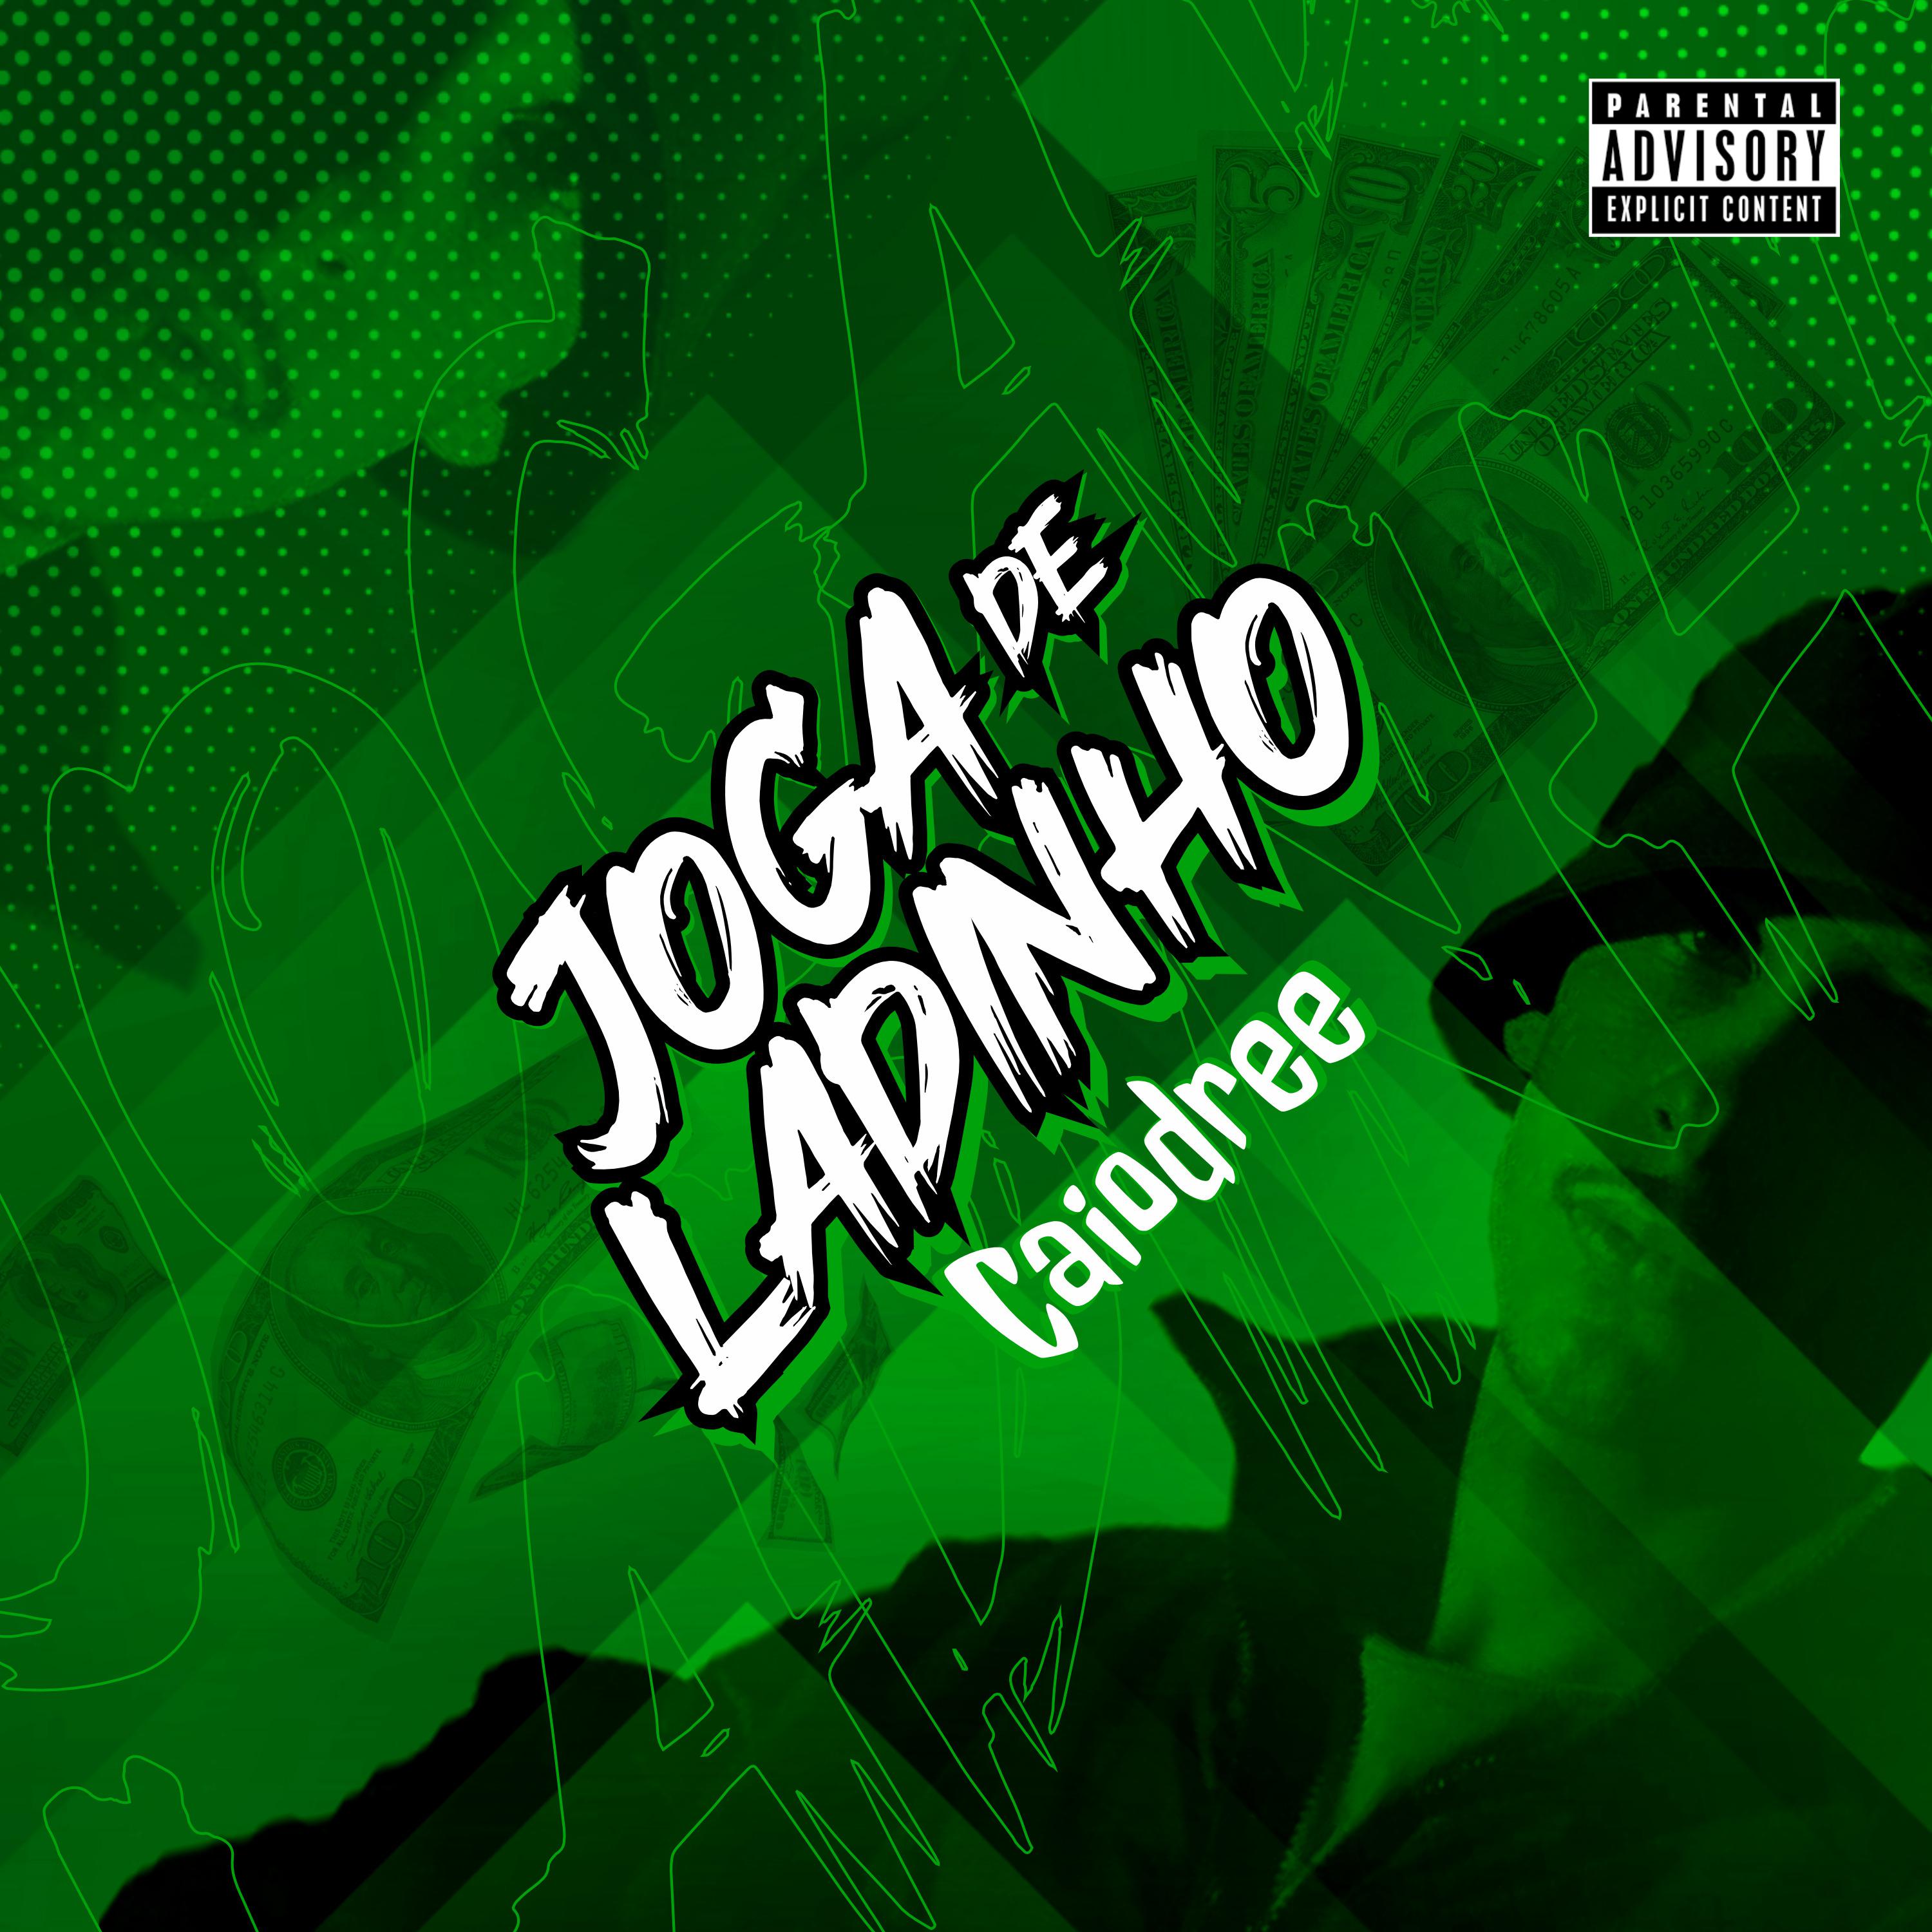 Постер альбома Joga de Ladinho